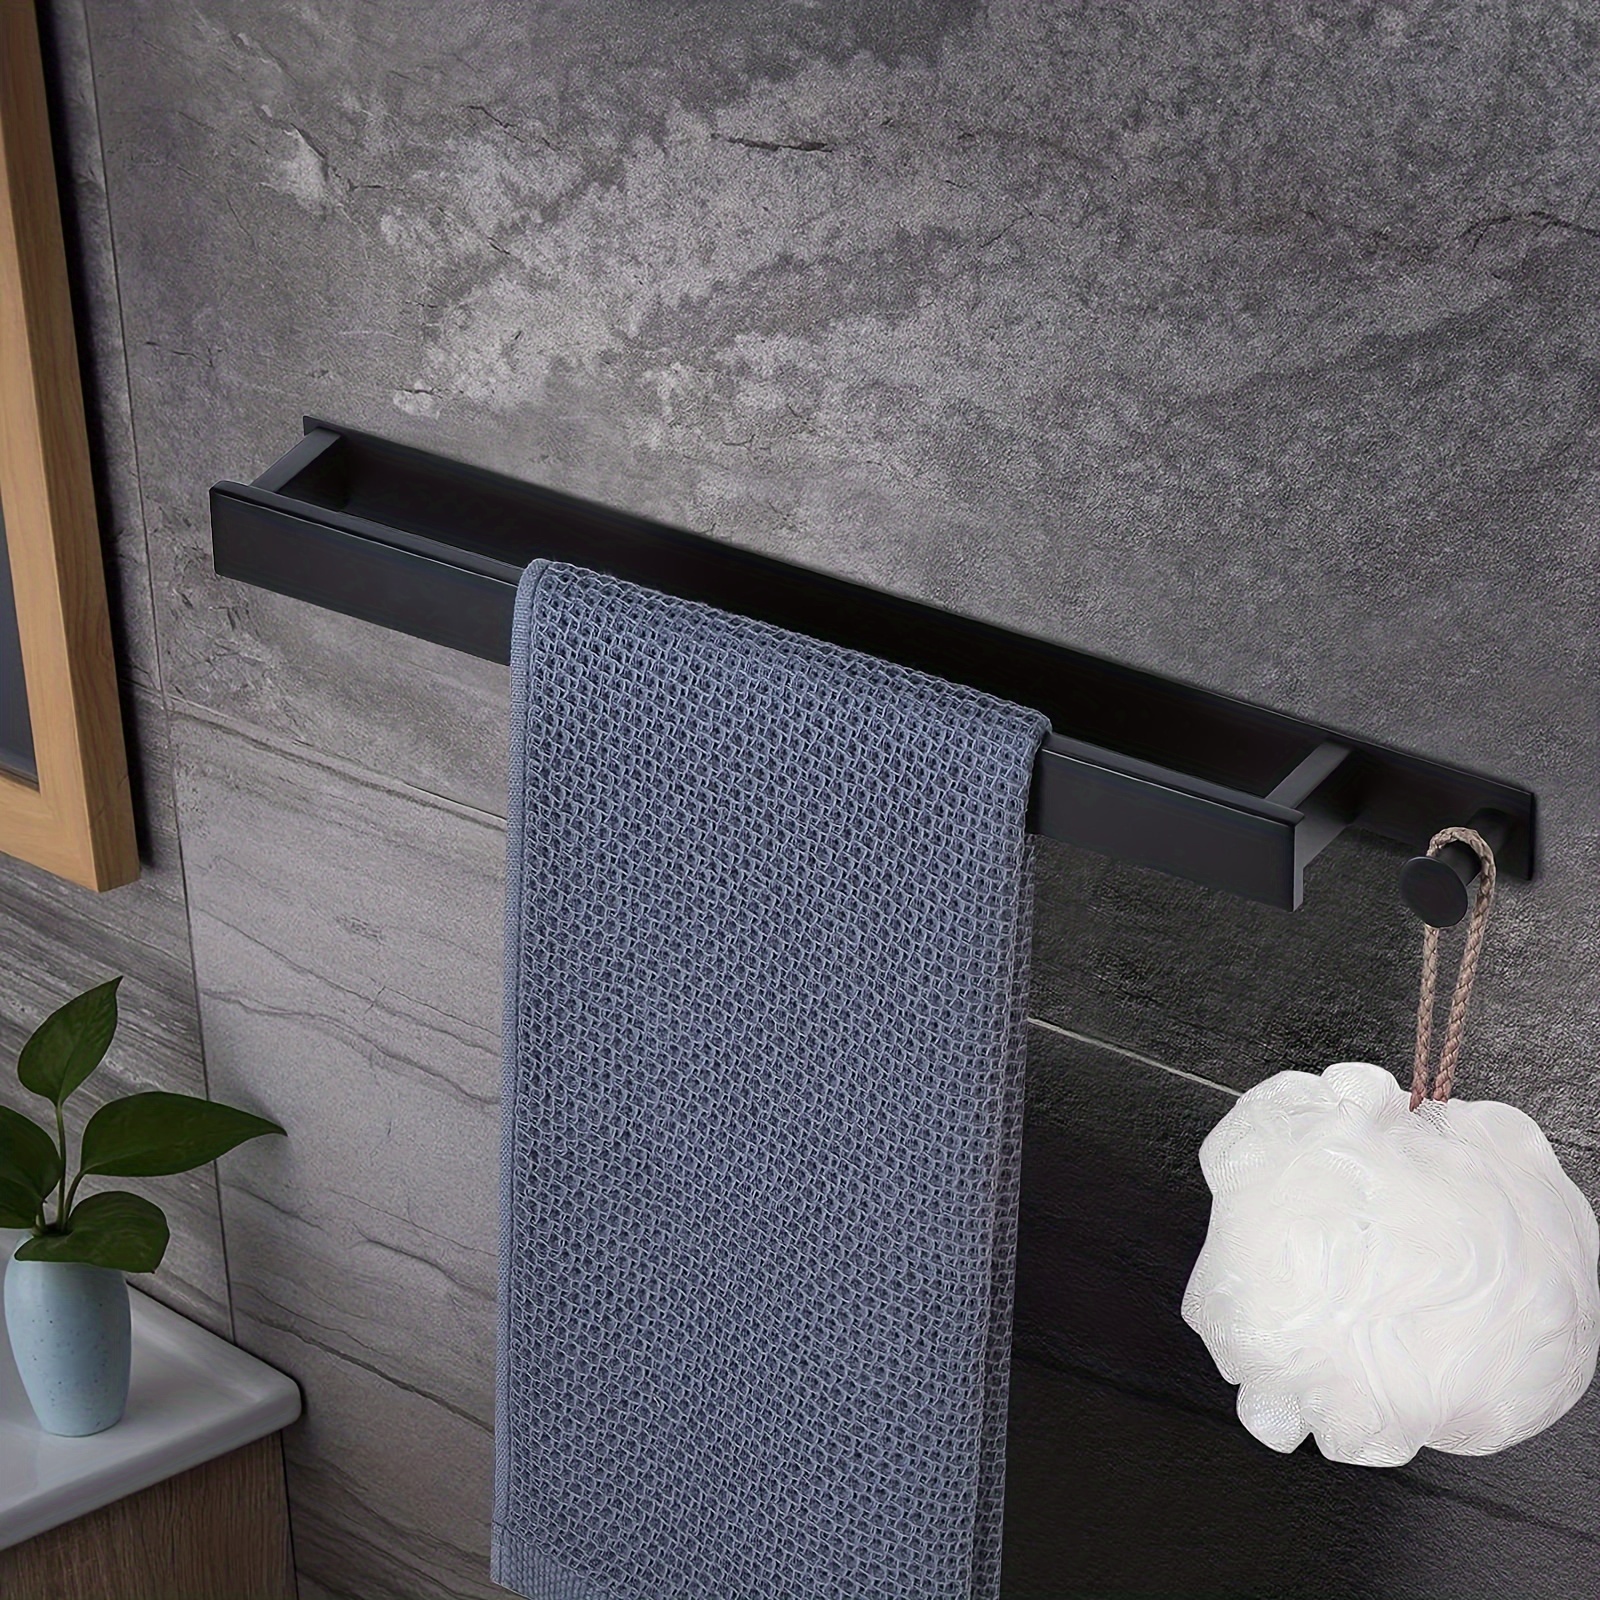 Self-Adhesive Wall Mounted Towel Rack for Bathroom – STORA